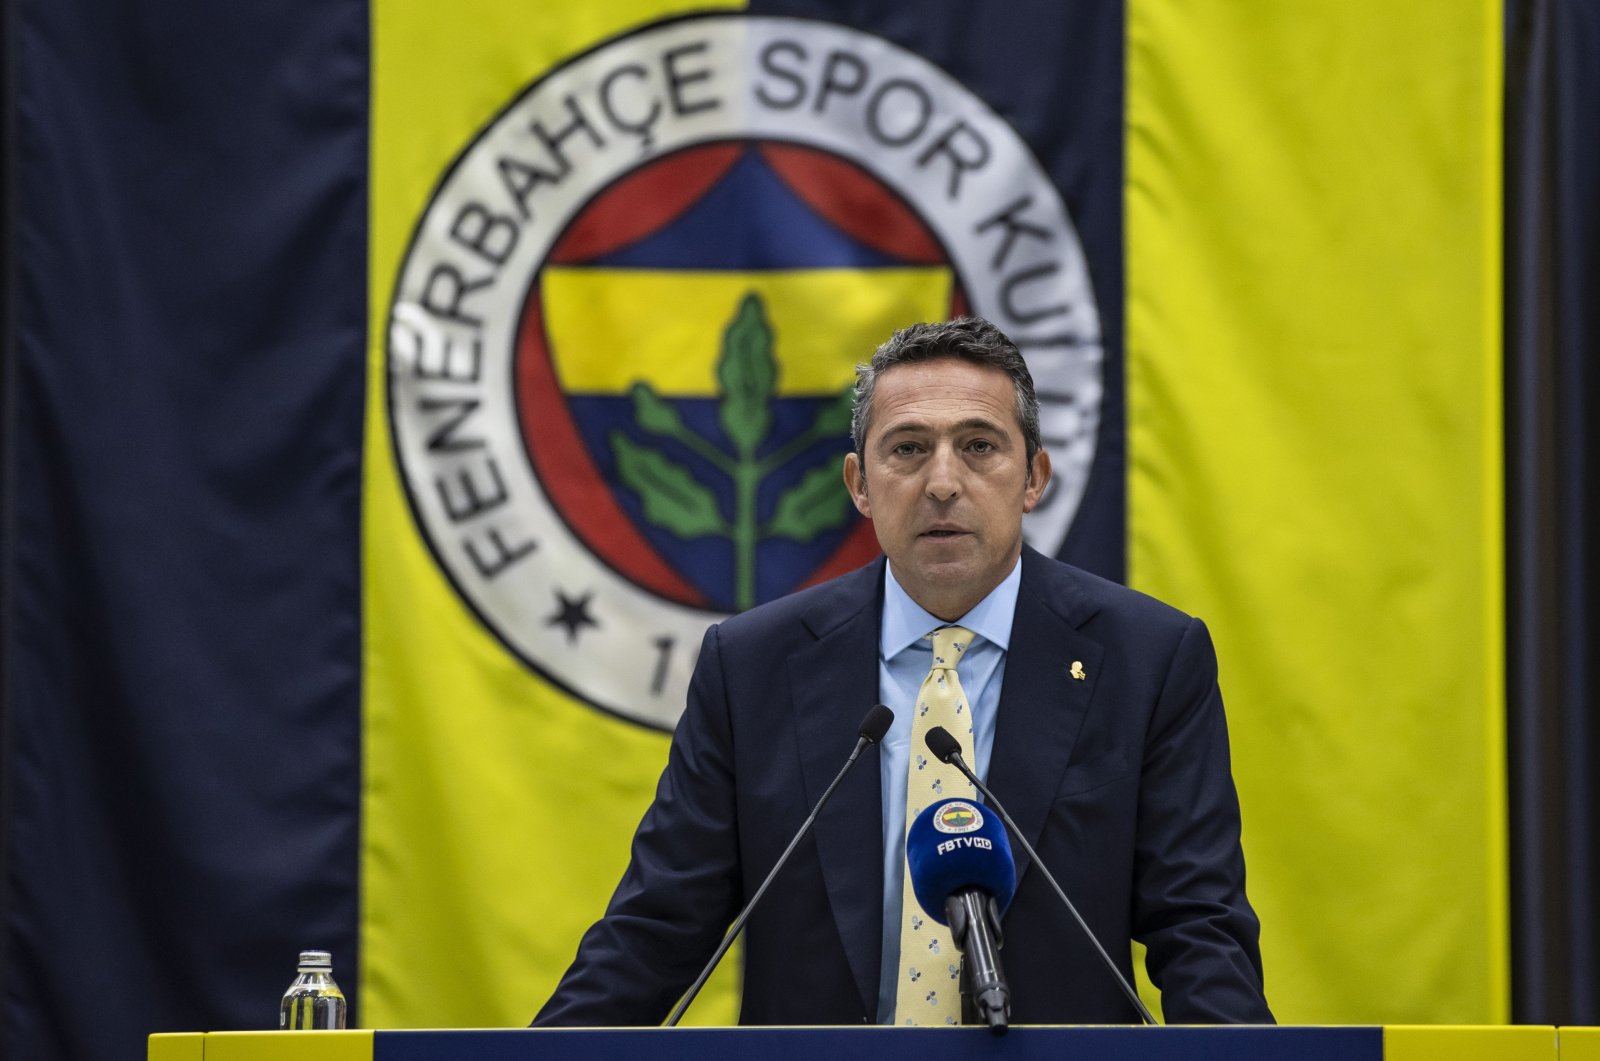 Fenerbahçe club president, Ali Koç, speaks at a program in Istanbul, Turkey, Nov. 6, 2021. (AA Photo)